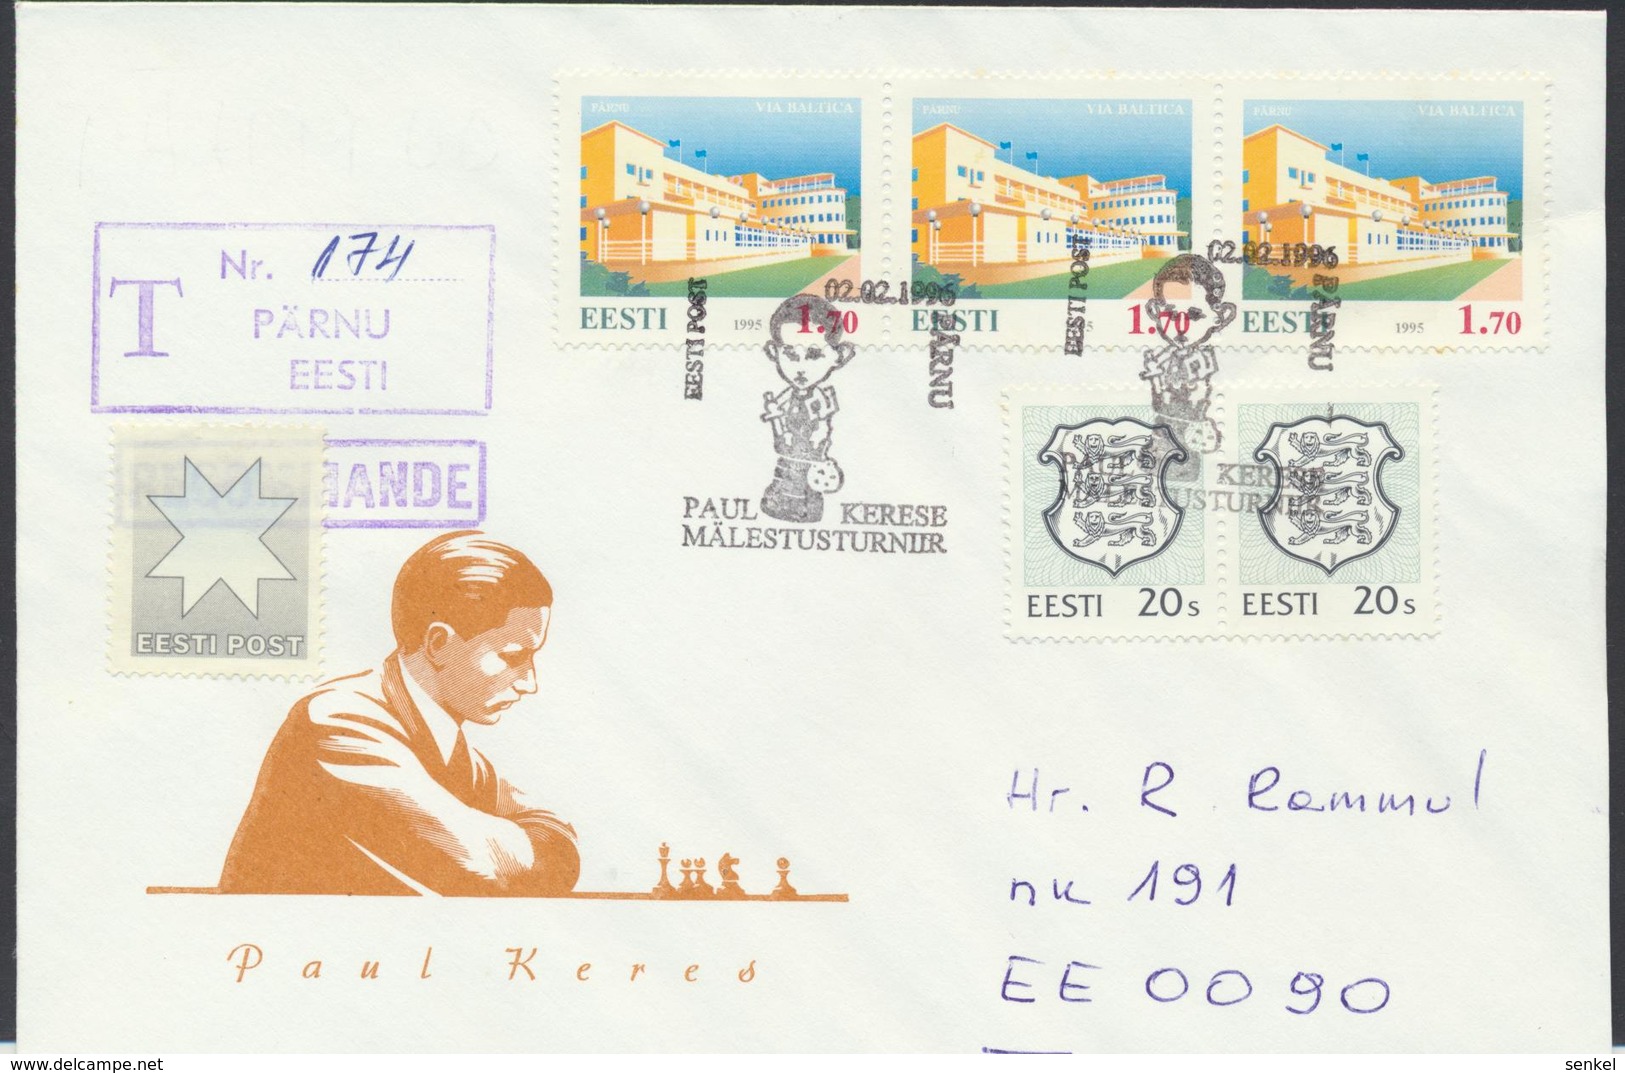 57-866 Estonia Pärnu Chess Keres Tournament 02.02.1996 Recommande From Post Arrival Postmark - Estonia